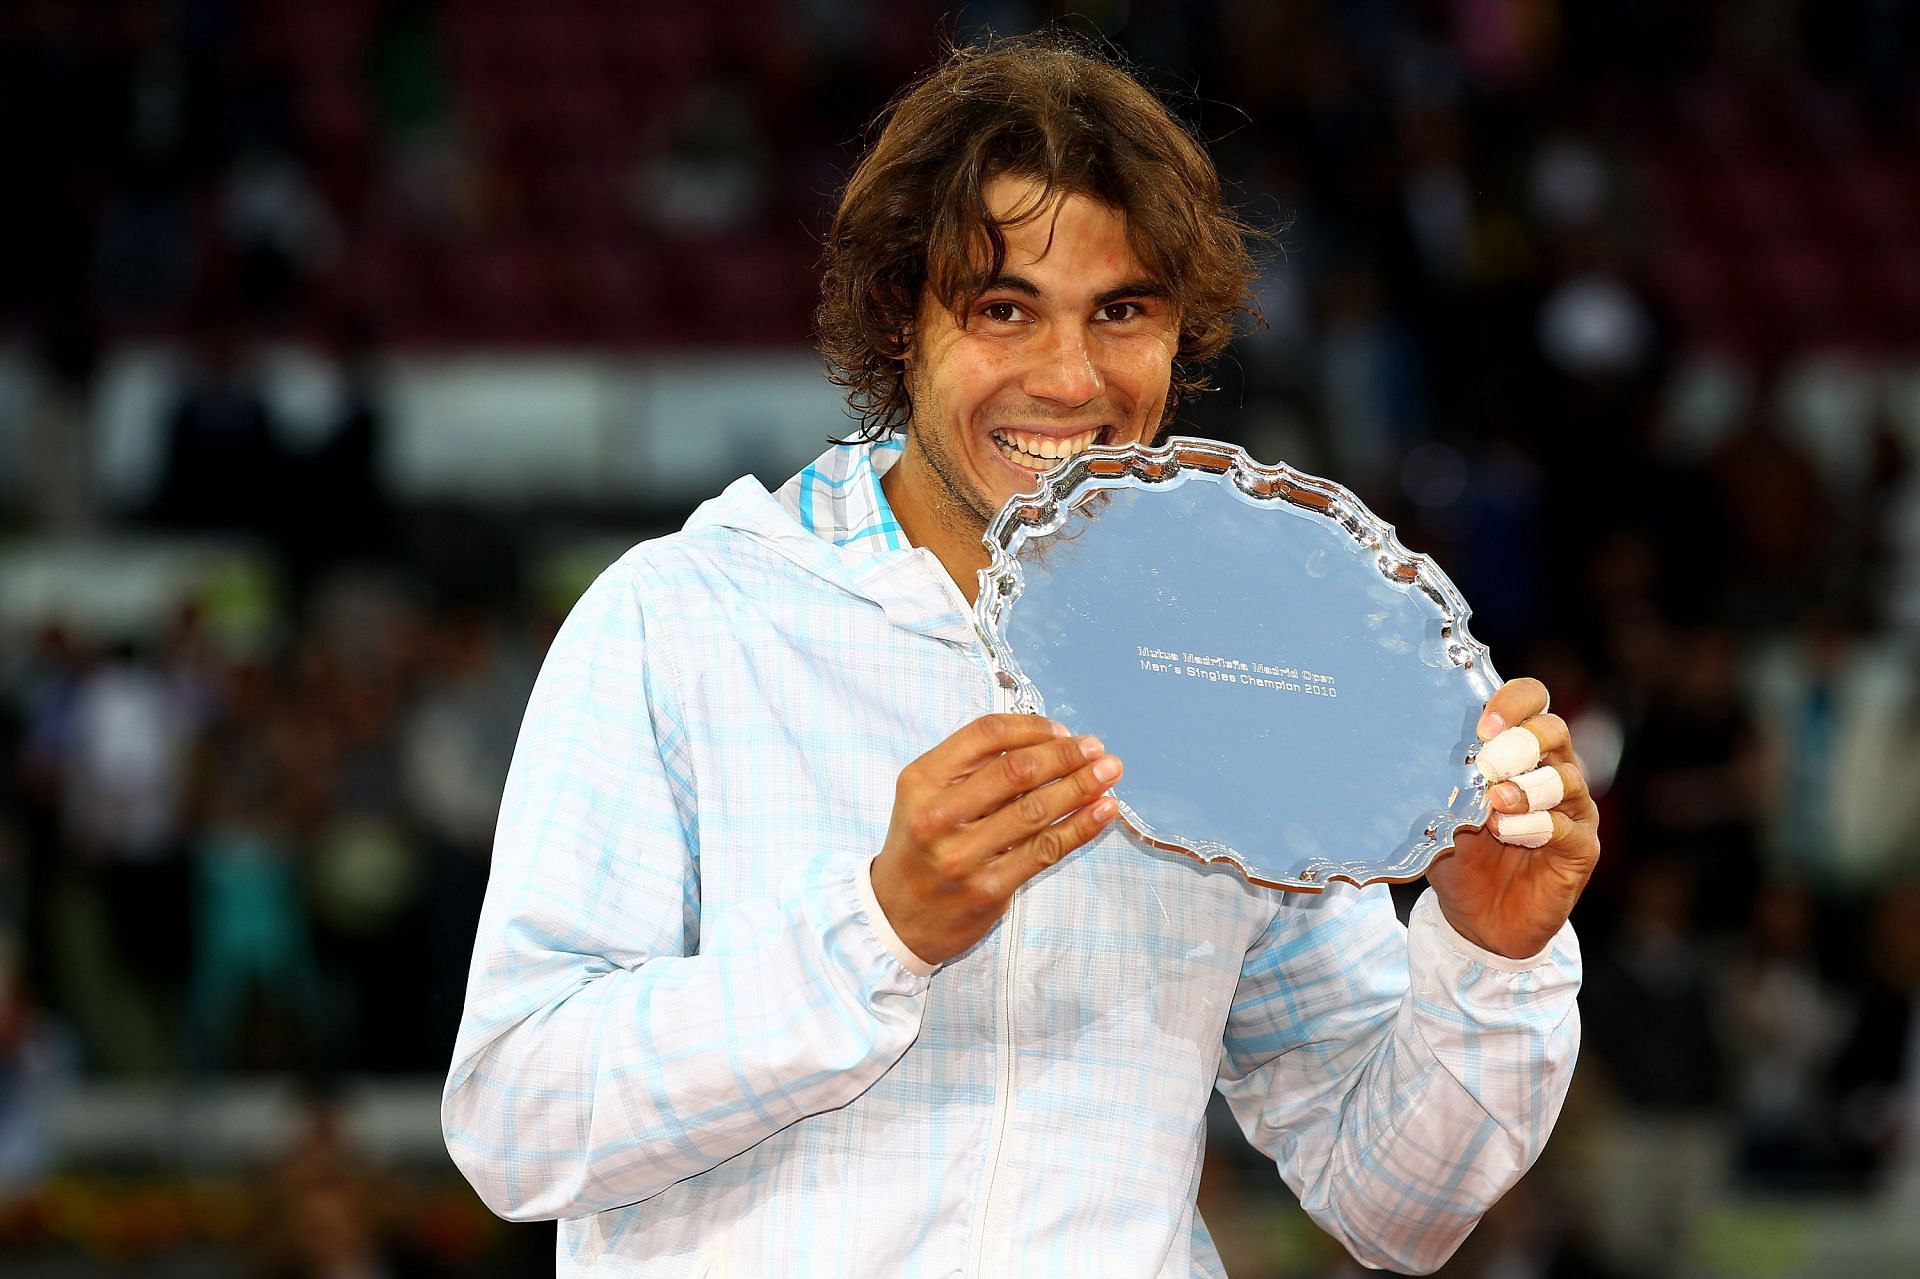 Rafael Nadal after winning the 2010 Madrid Open against Roger Federer